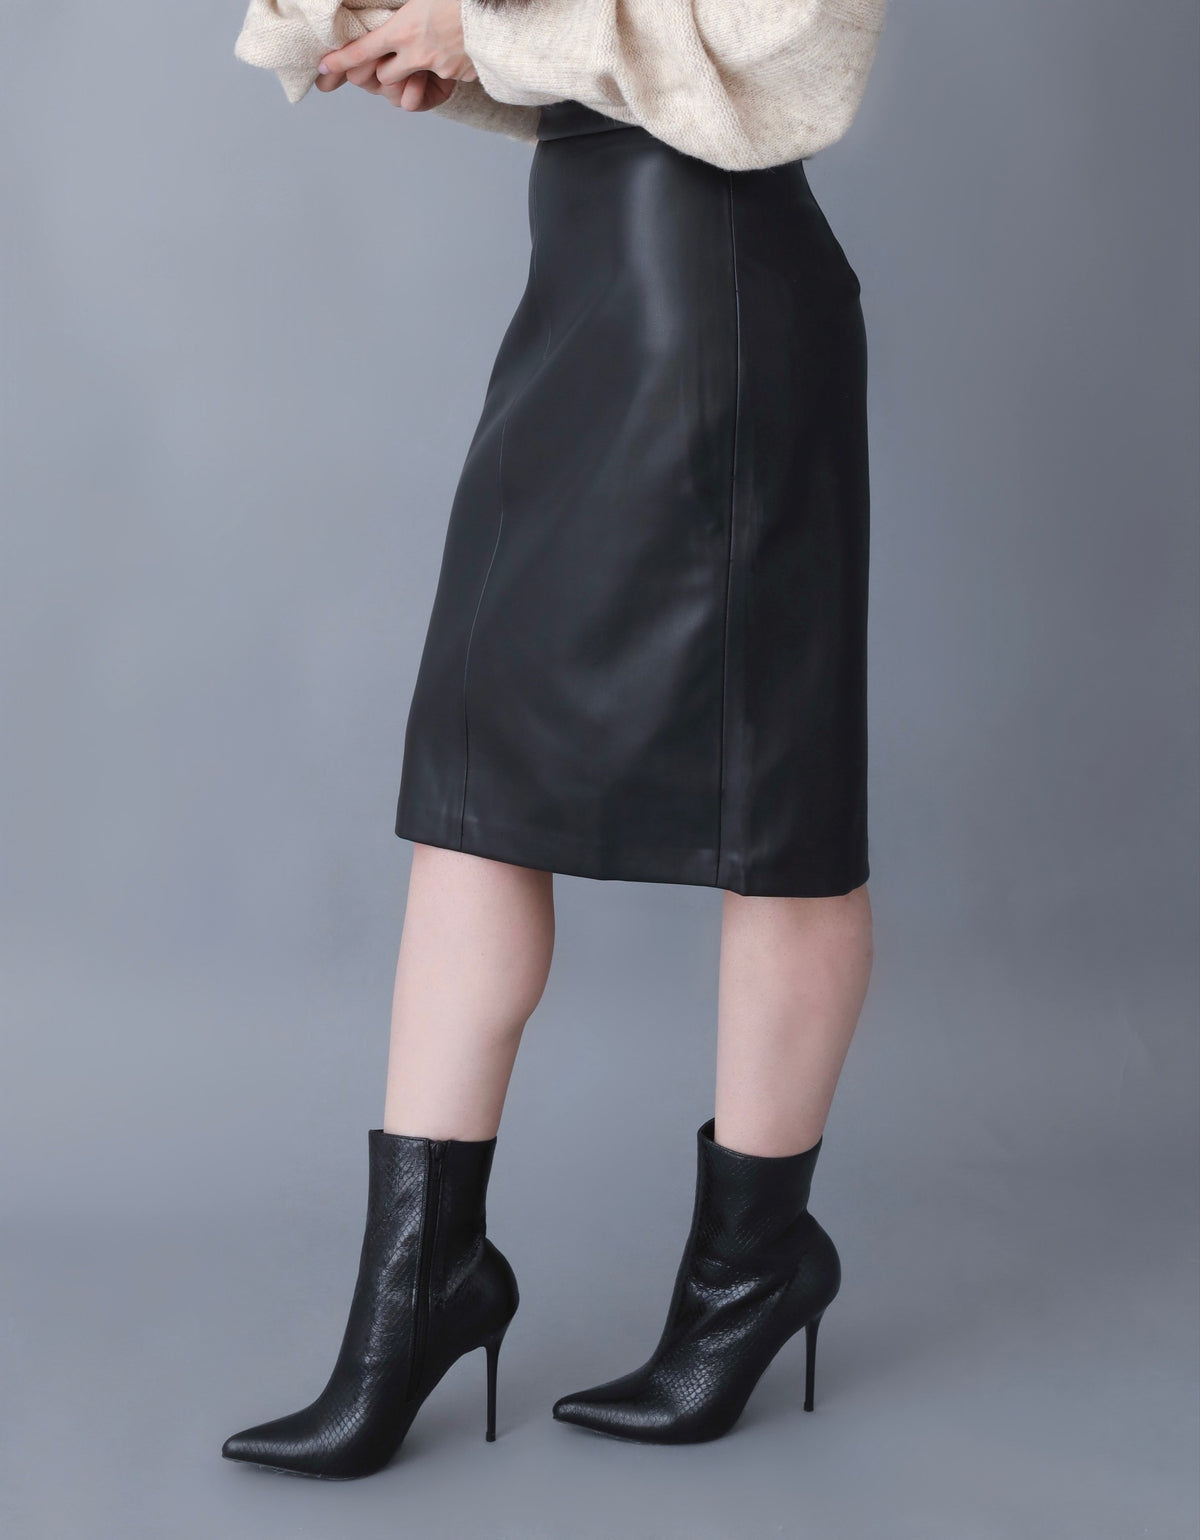 Kortney Black Vegan Leather Pencil Skirt